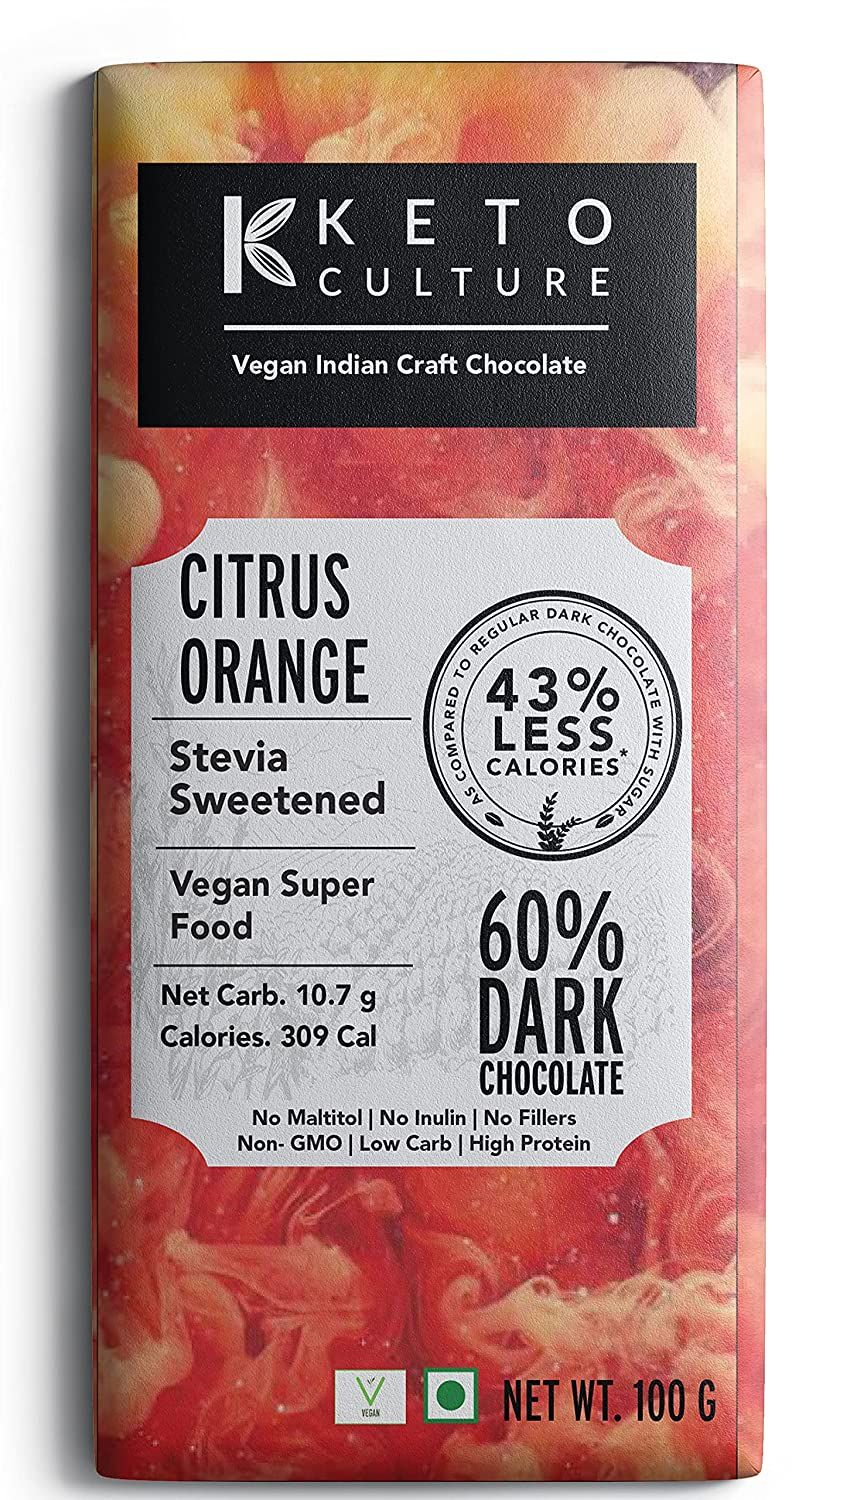 Keto Culture Zesty Orange Vegan Dark Chocolate Image